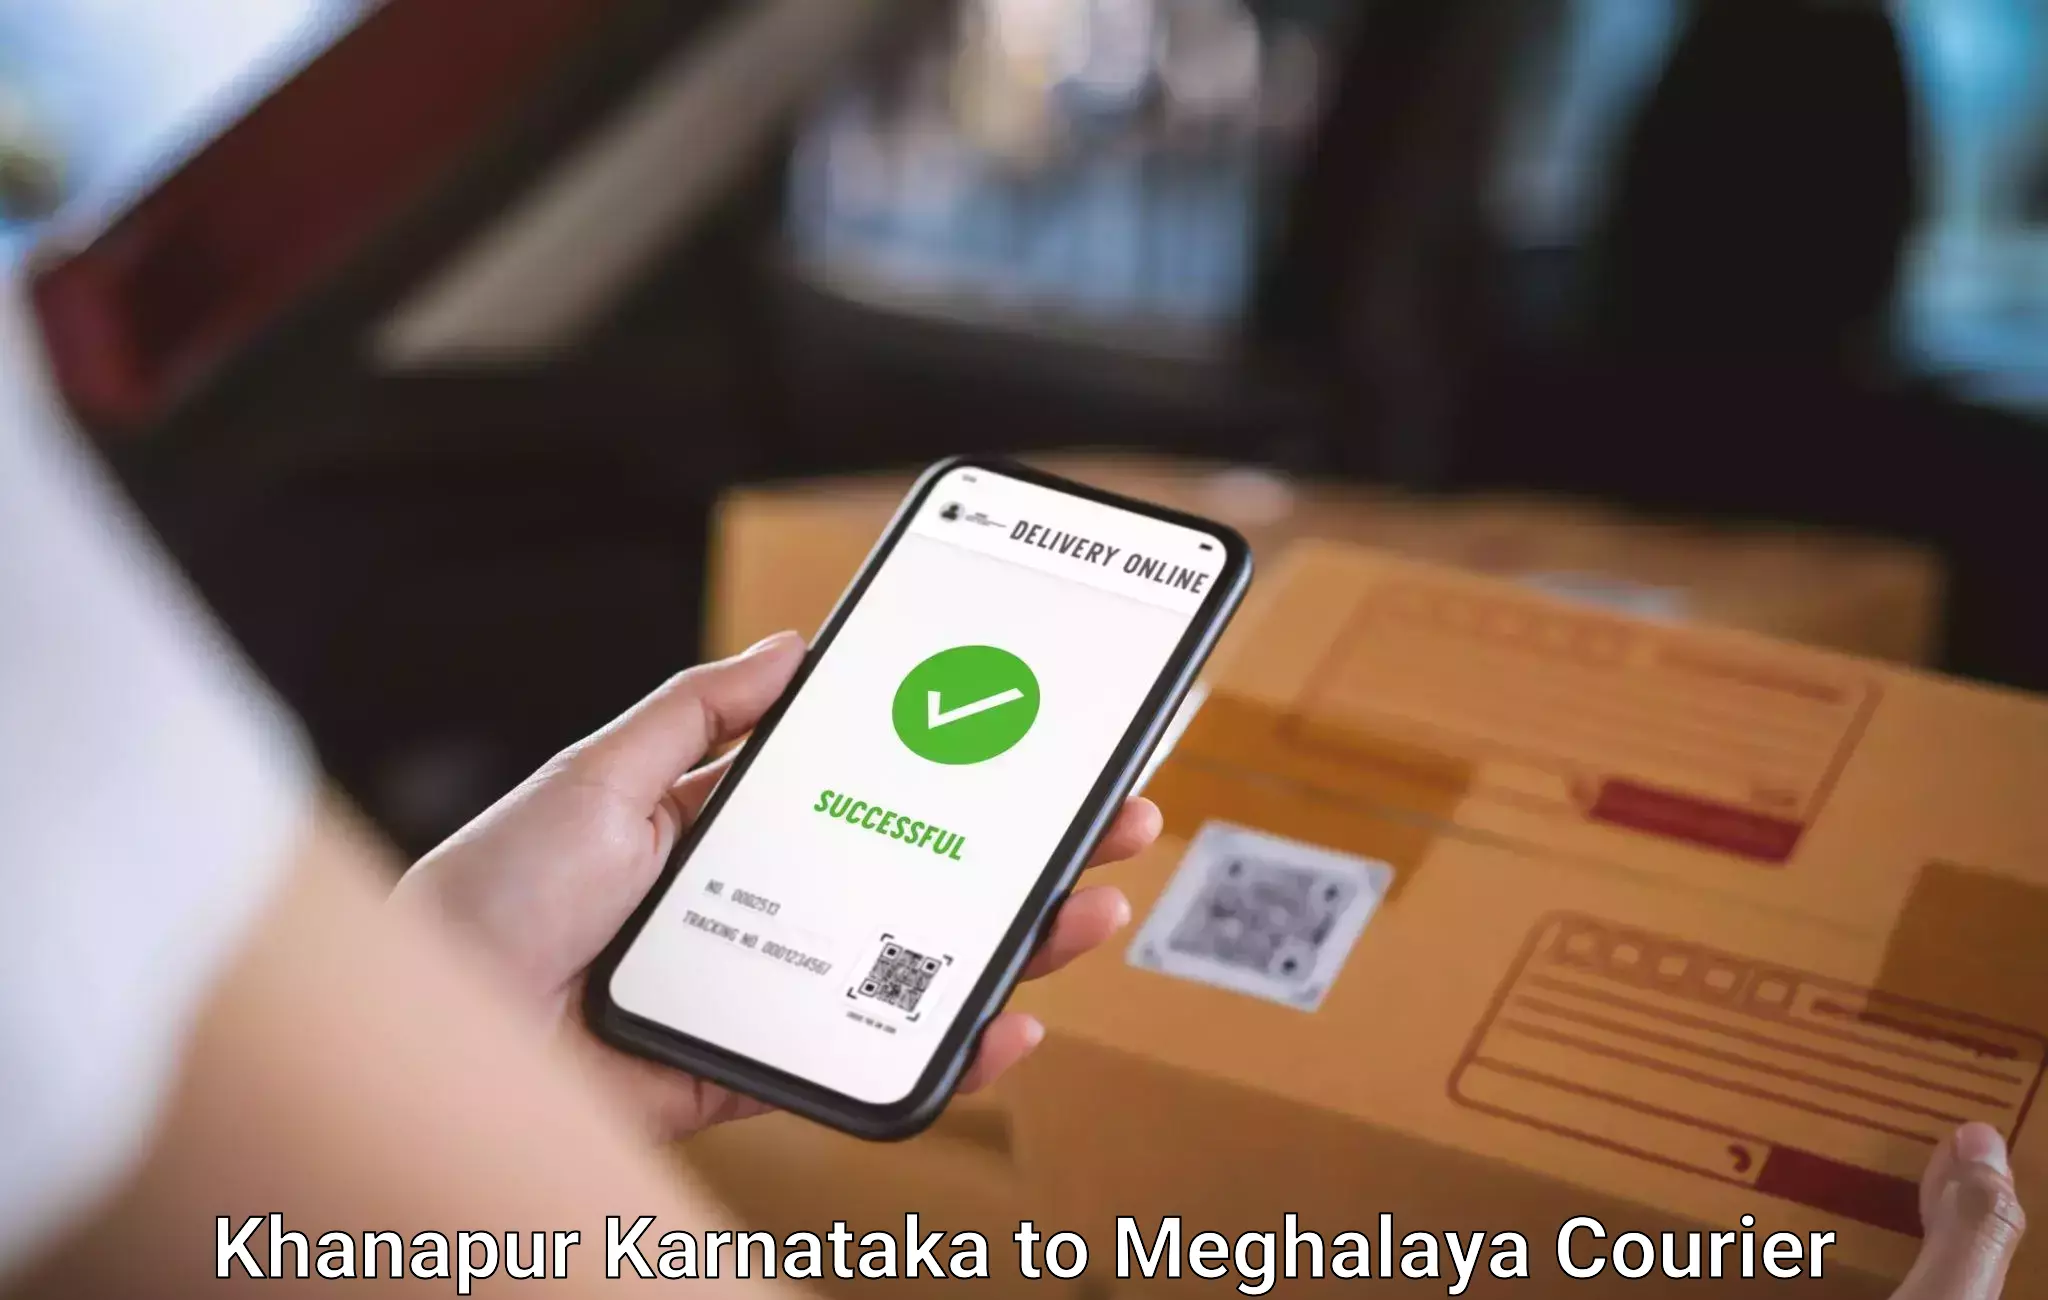 Luggage shipment specialists Khanapur Karnataka to Meghalaya